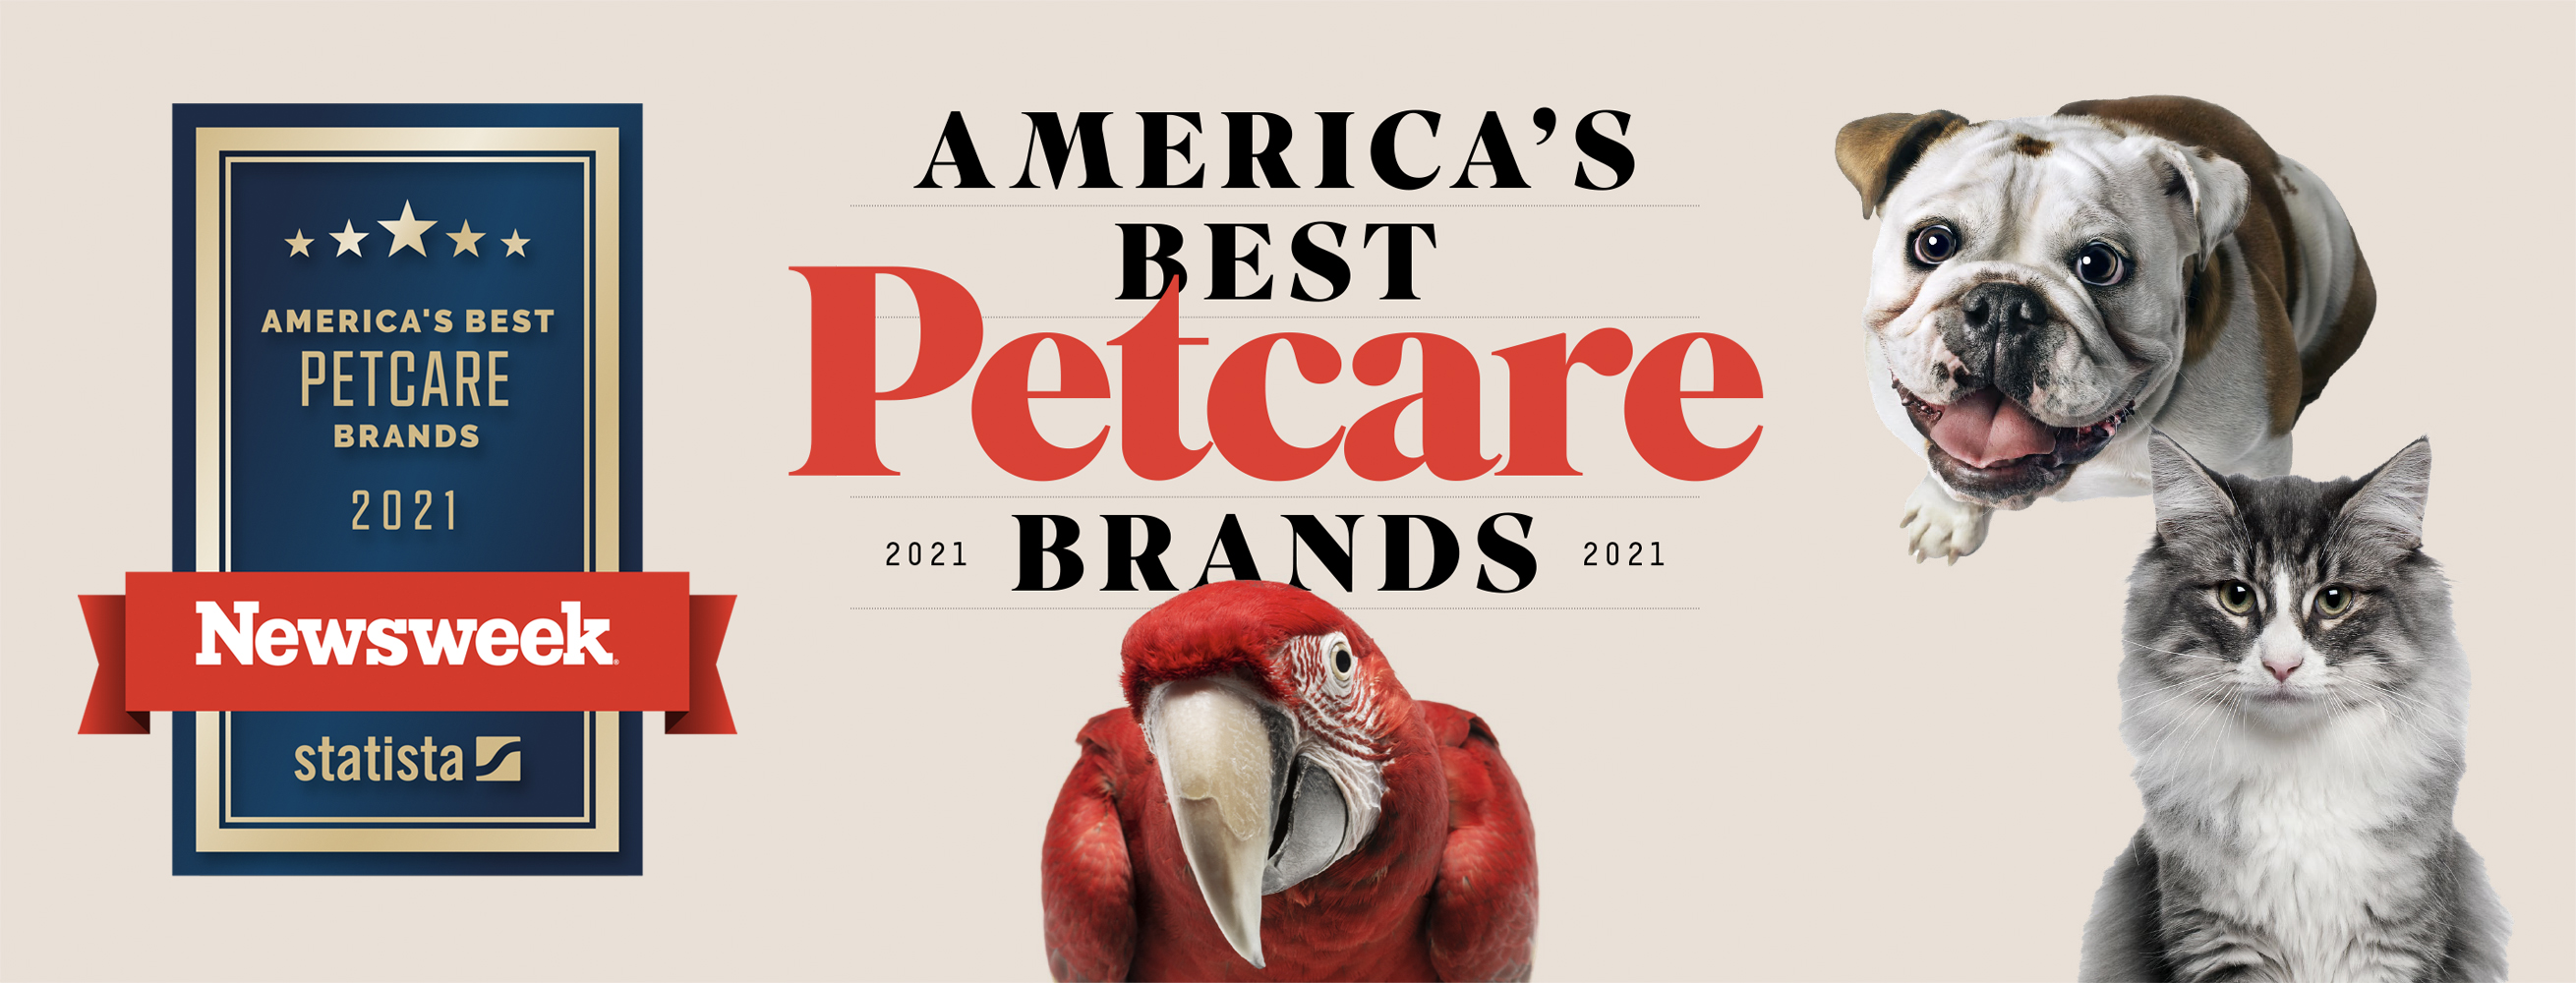 America's Best PetCare Brands 2021